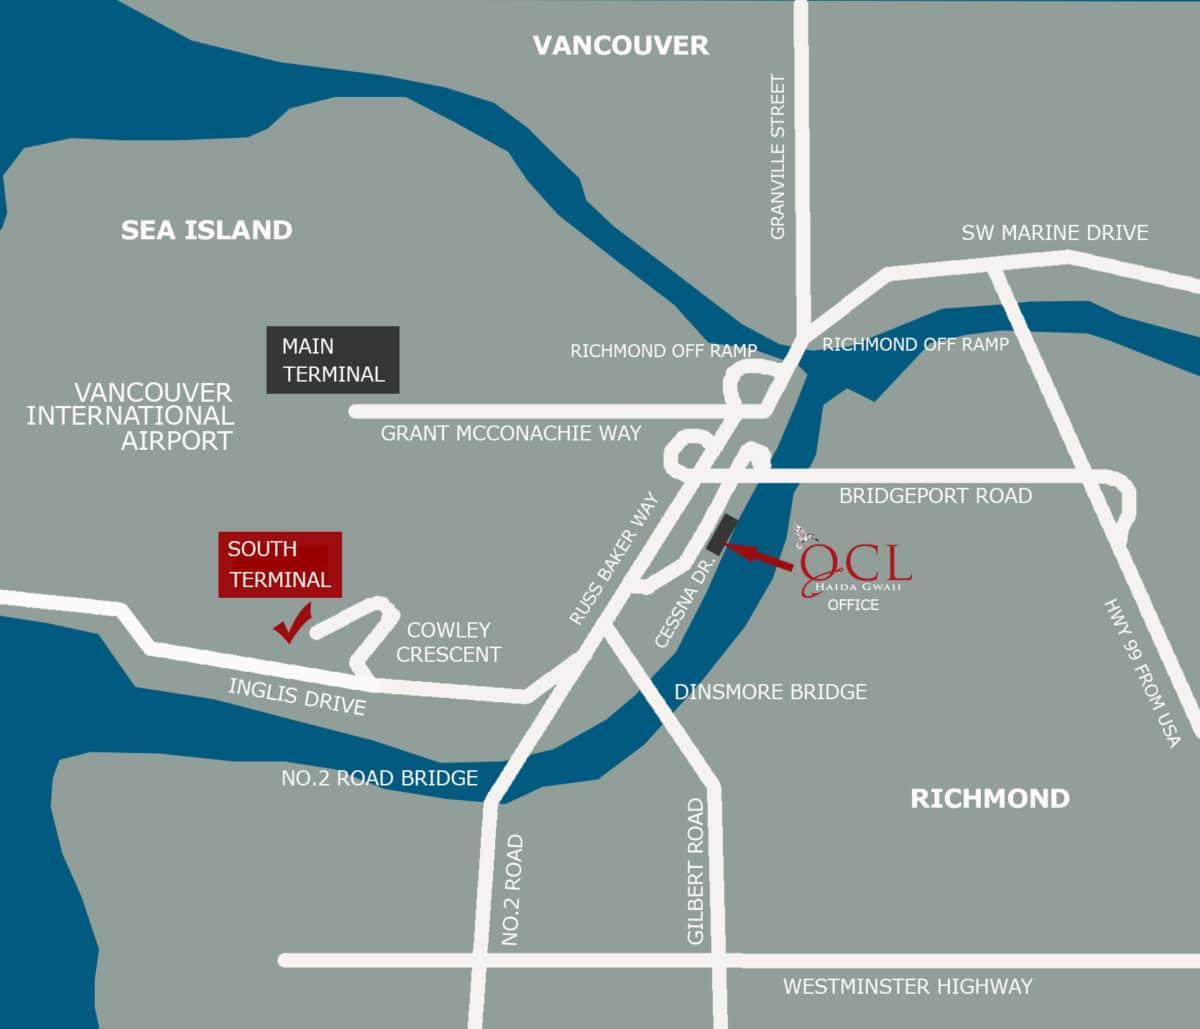 Локација на мапи међународни аеродром Ванкувер 